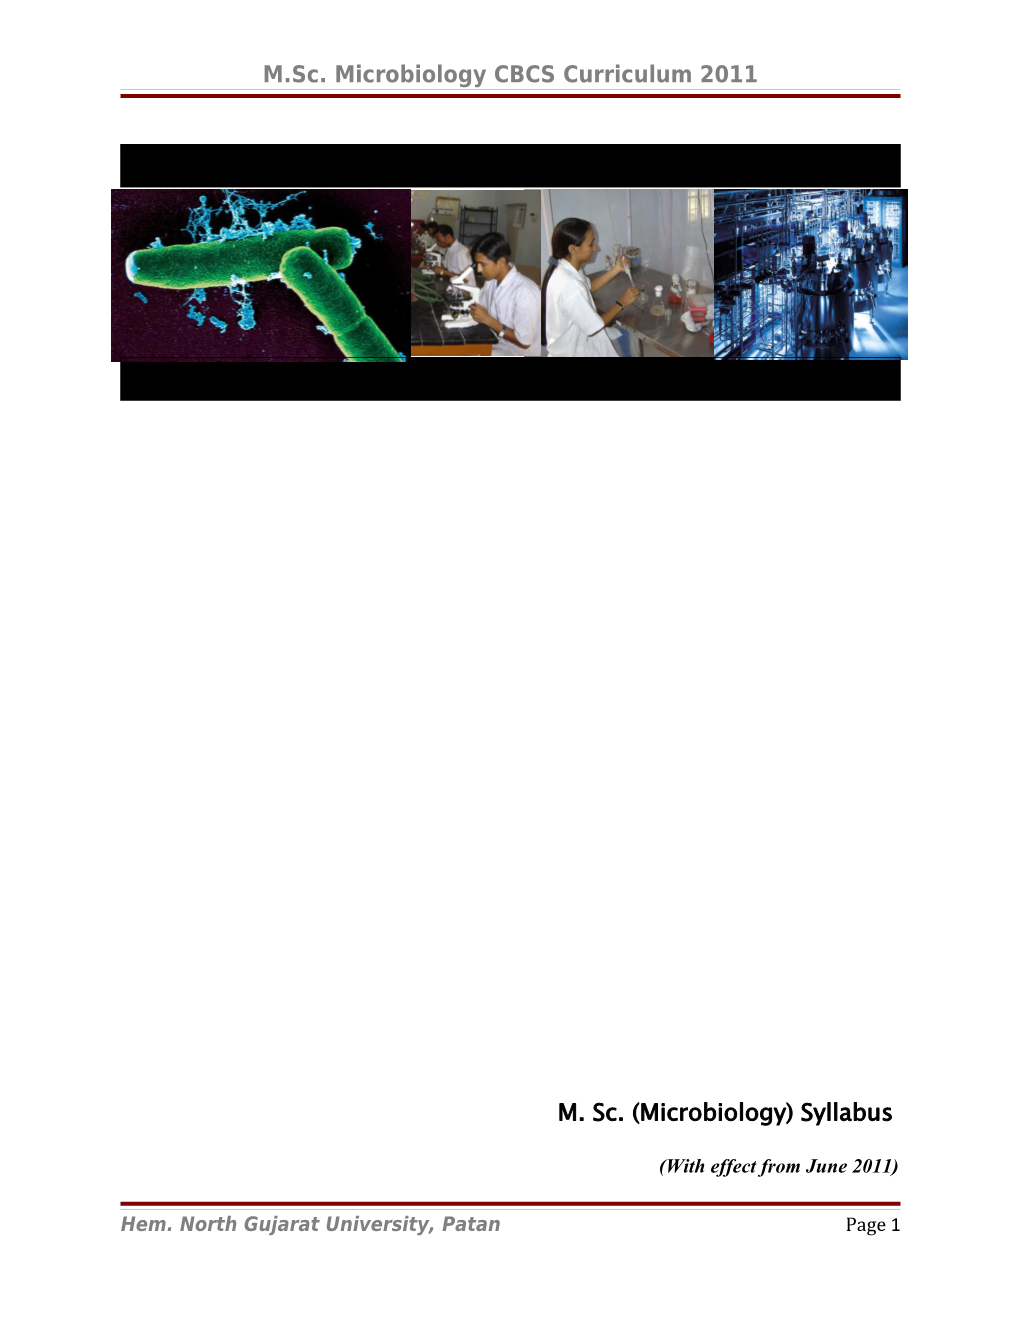 M.Sc. Microbiology CBCS Curriculum 2010